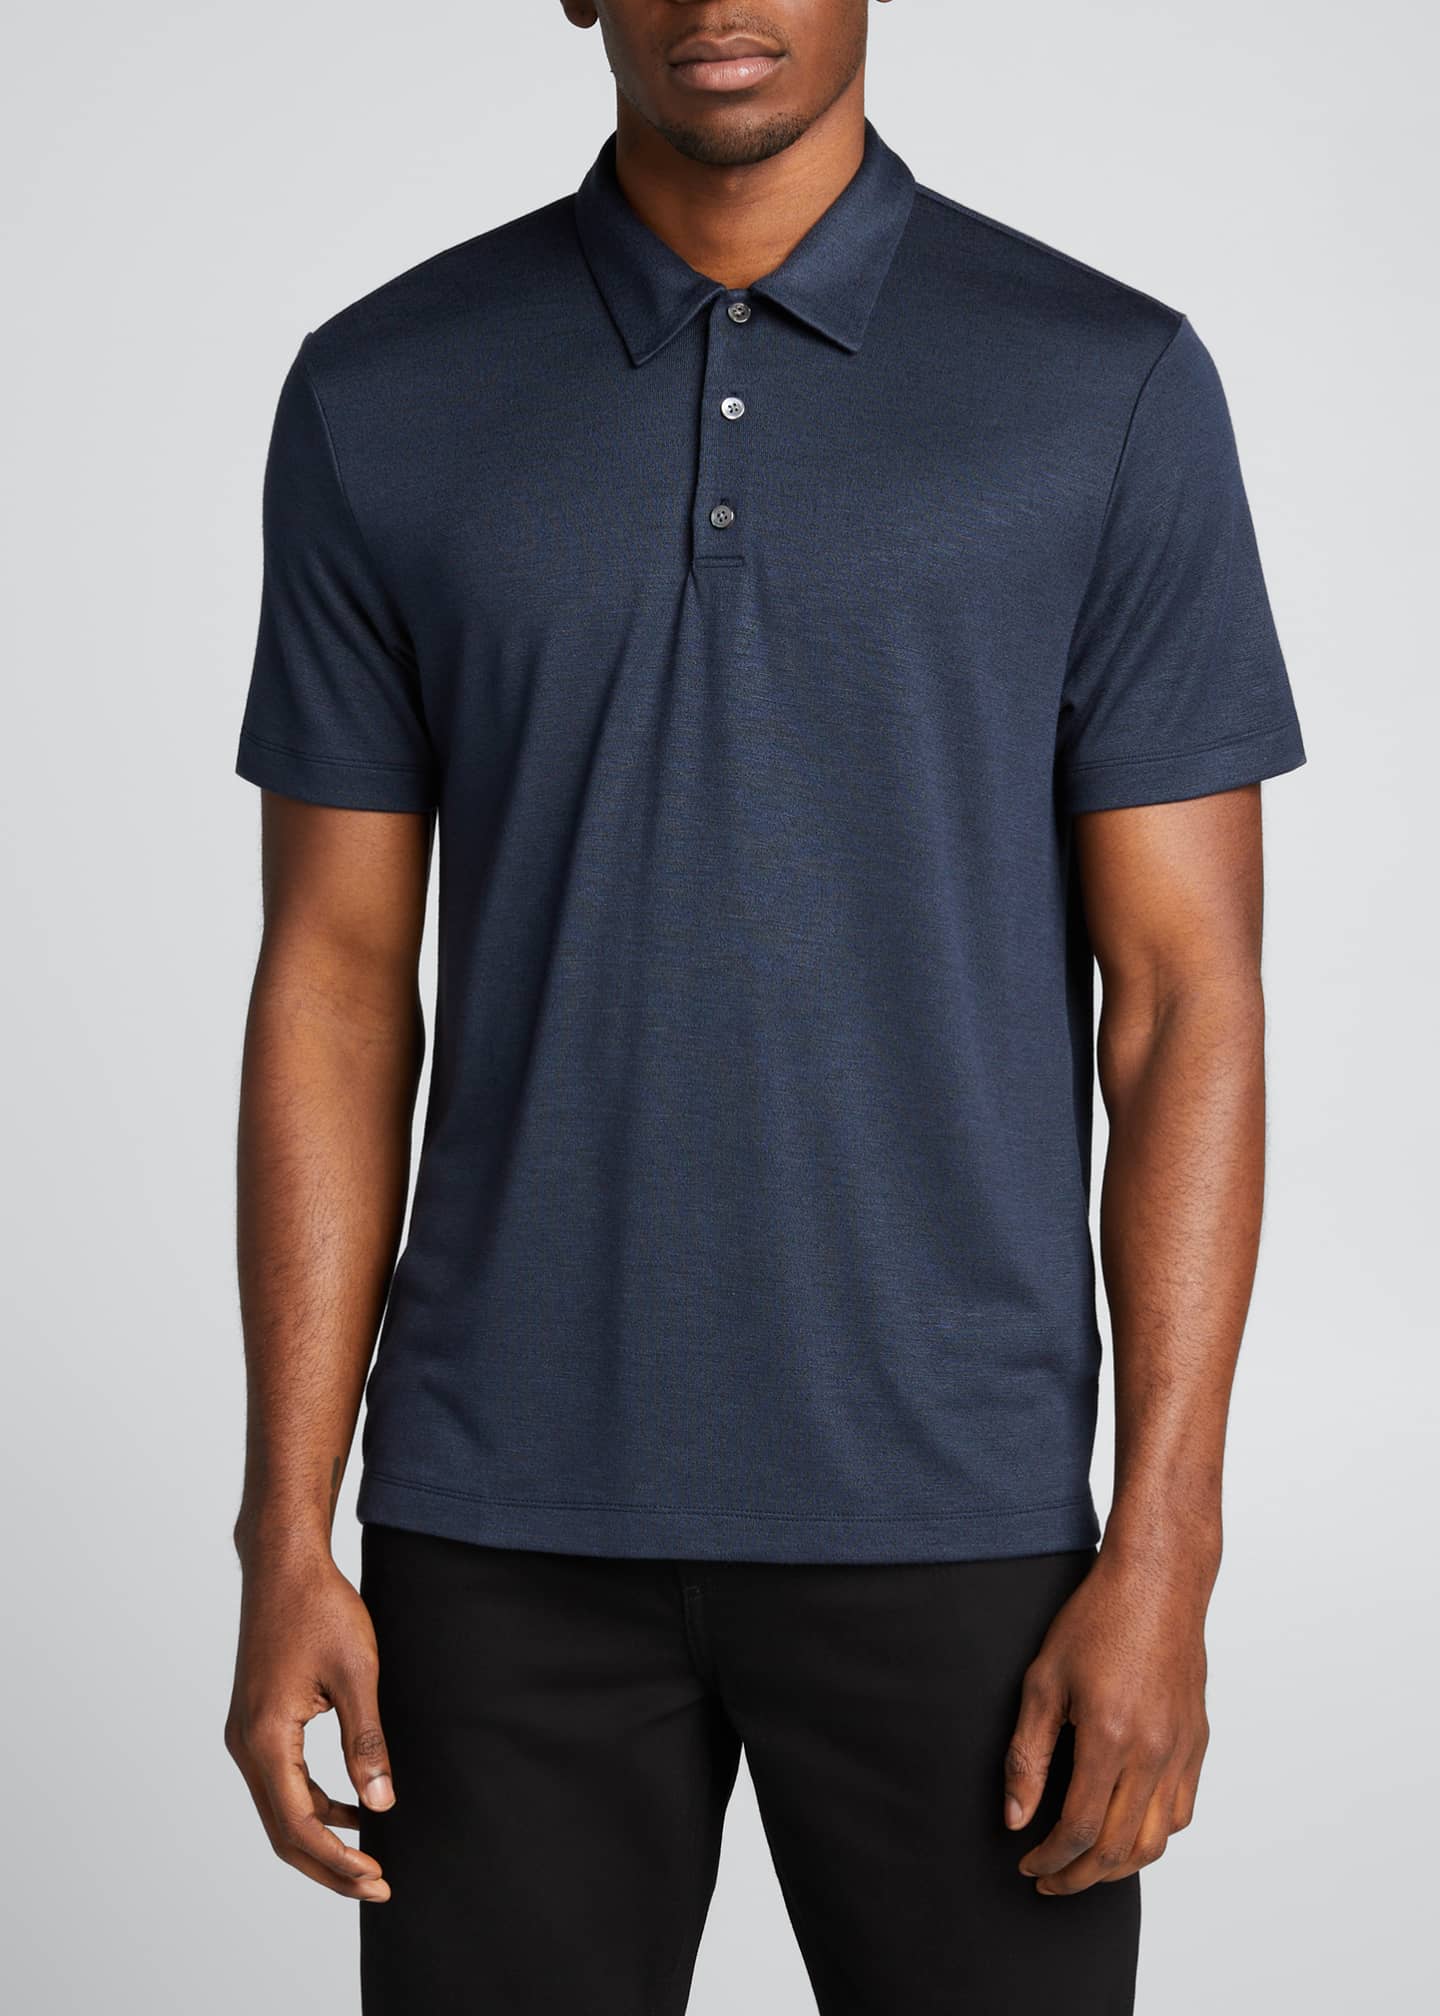 Theory Men's Modal Jersey Polo Shirt - Bergdorf Goodman